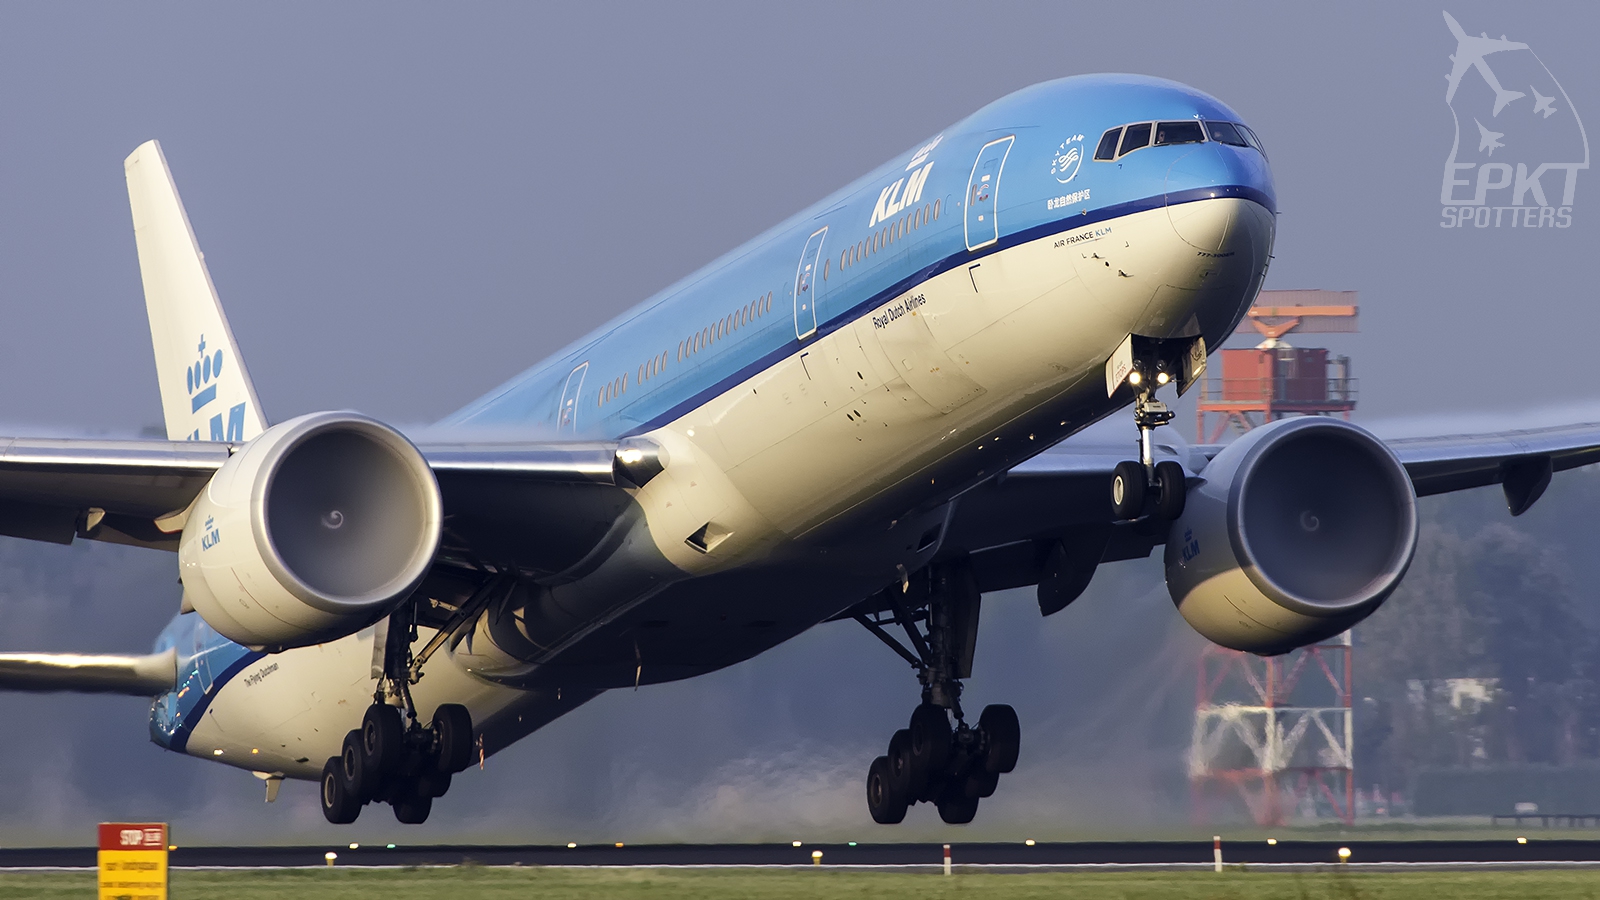 PH-BVG - Boeing 777 -306ER (KLM Royal Dutch Airlines) / Amsterdam Airport Schiphol - Amsterdam Netherlands [EHAM/AMS]